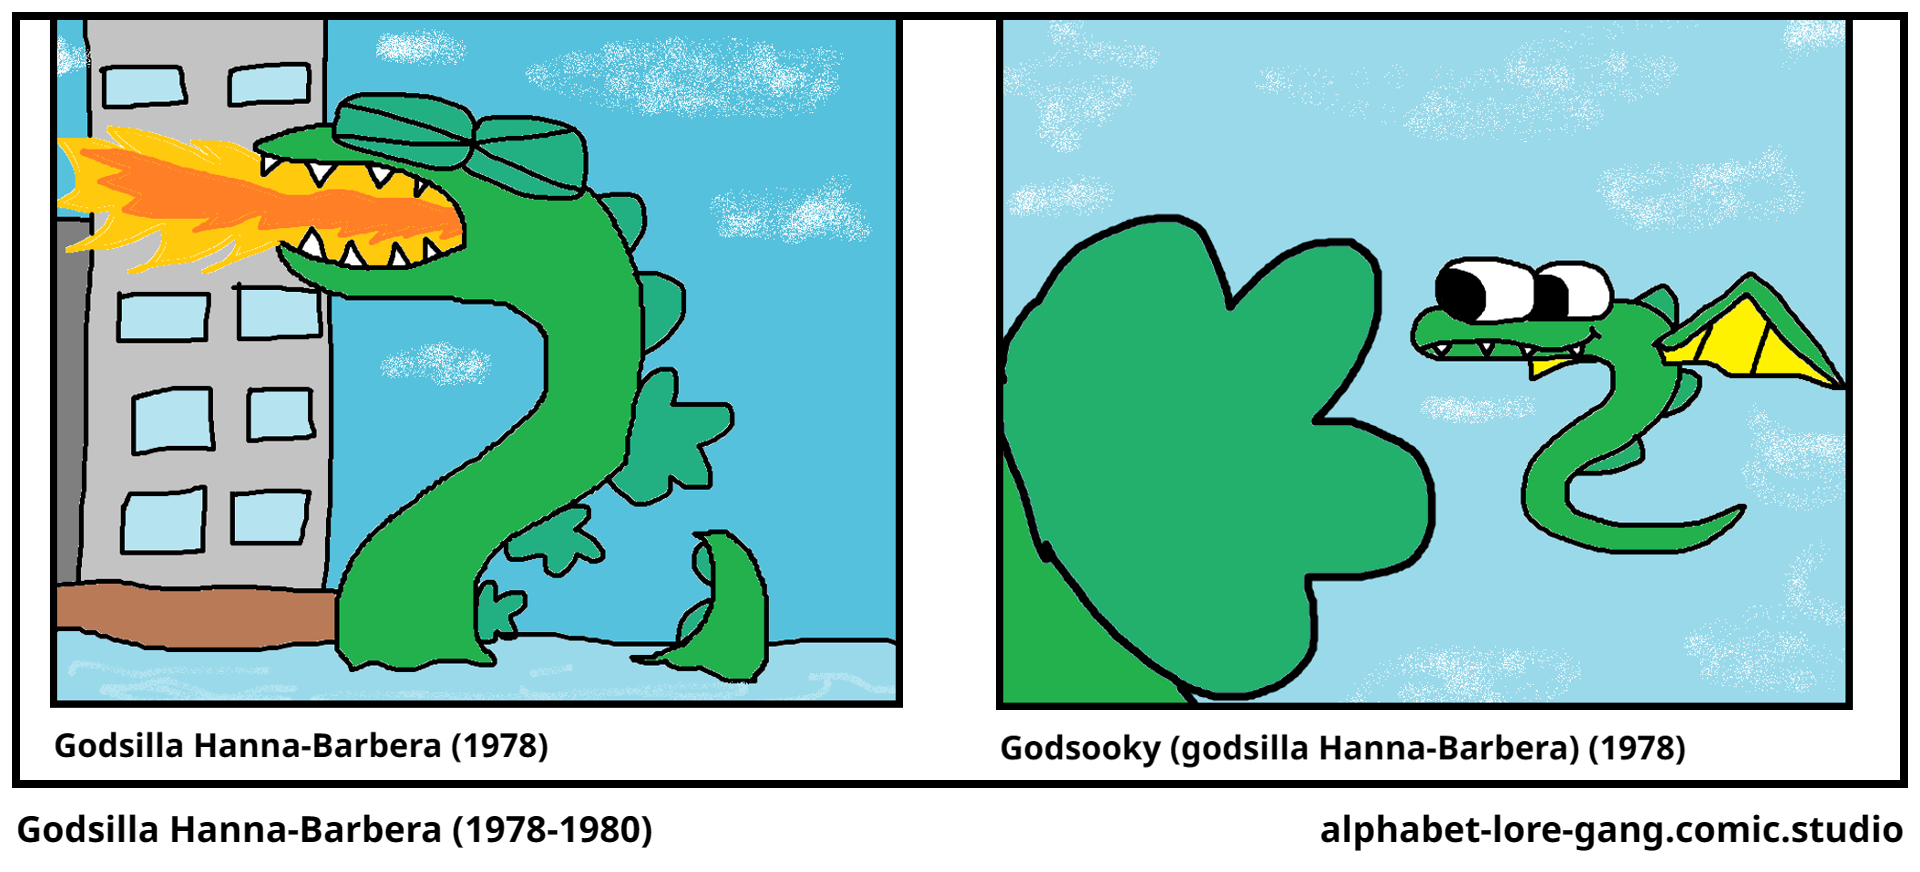 Godsilla Hanna-Barbera (1978-1980)